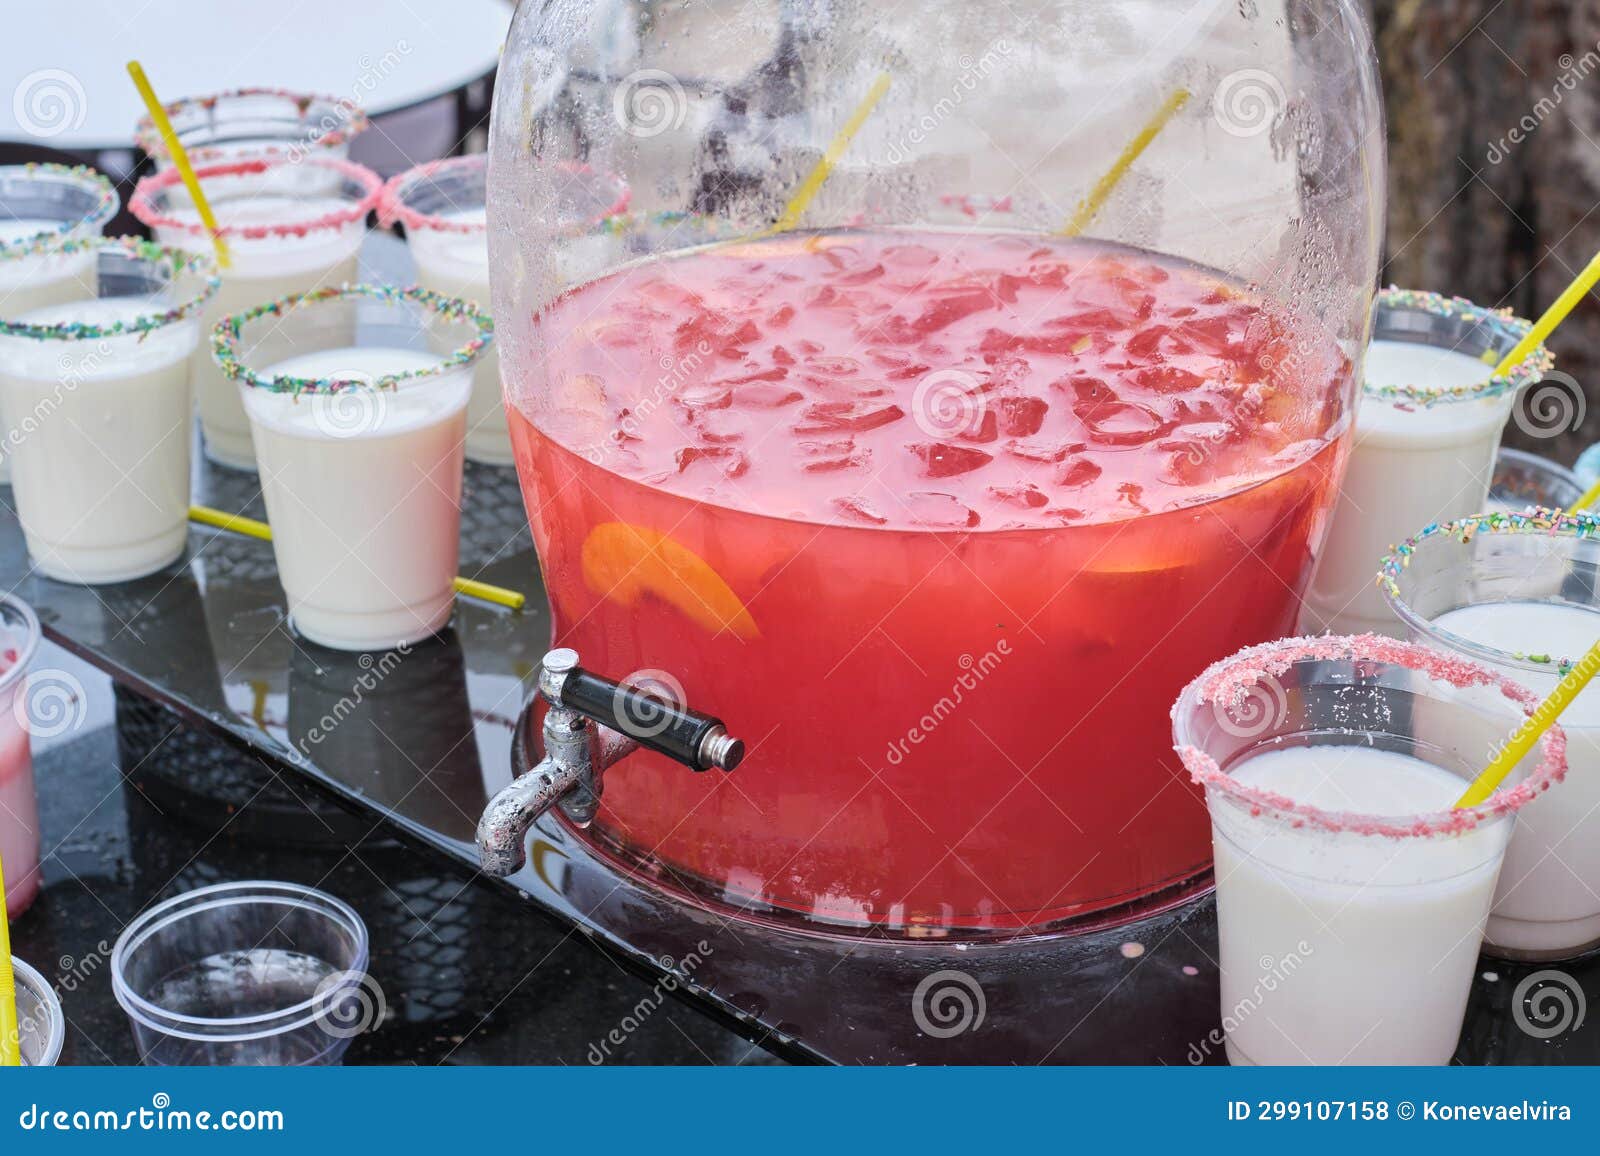 https://thumbs.dreamstime.com/z/refreshing-pink-lemonade-dispenser-cups-rimmed-sugar-await-celebrates-trend-creative-drink-presentations-299107158.jpg